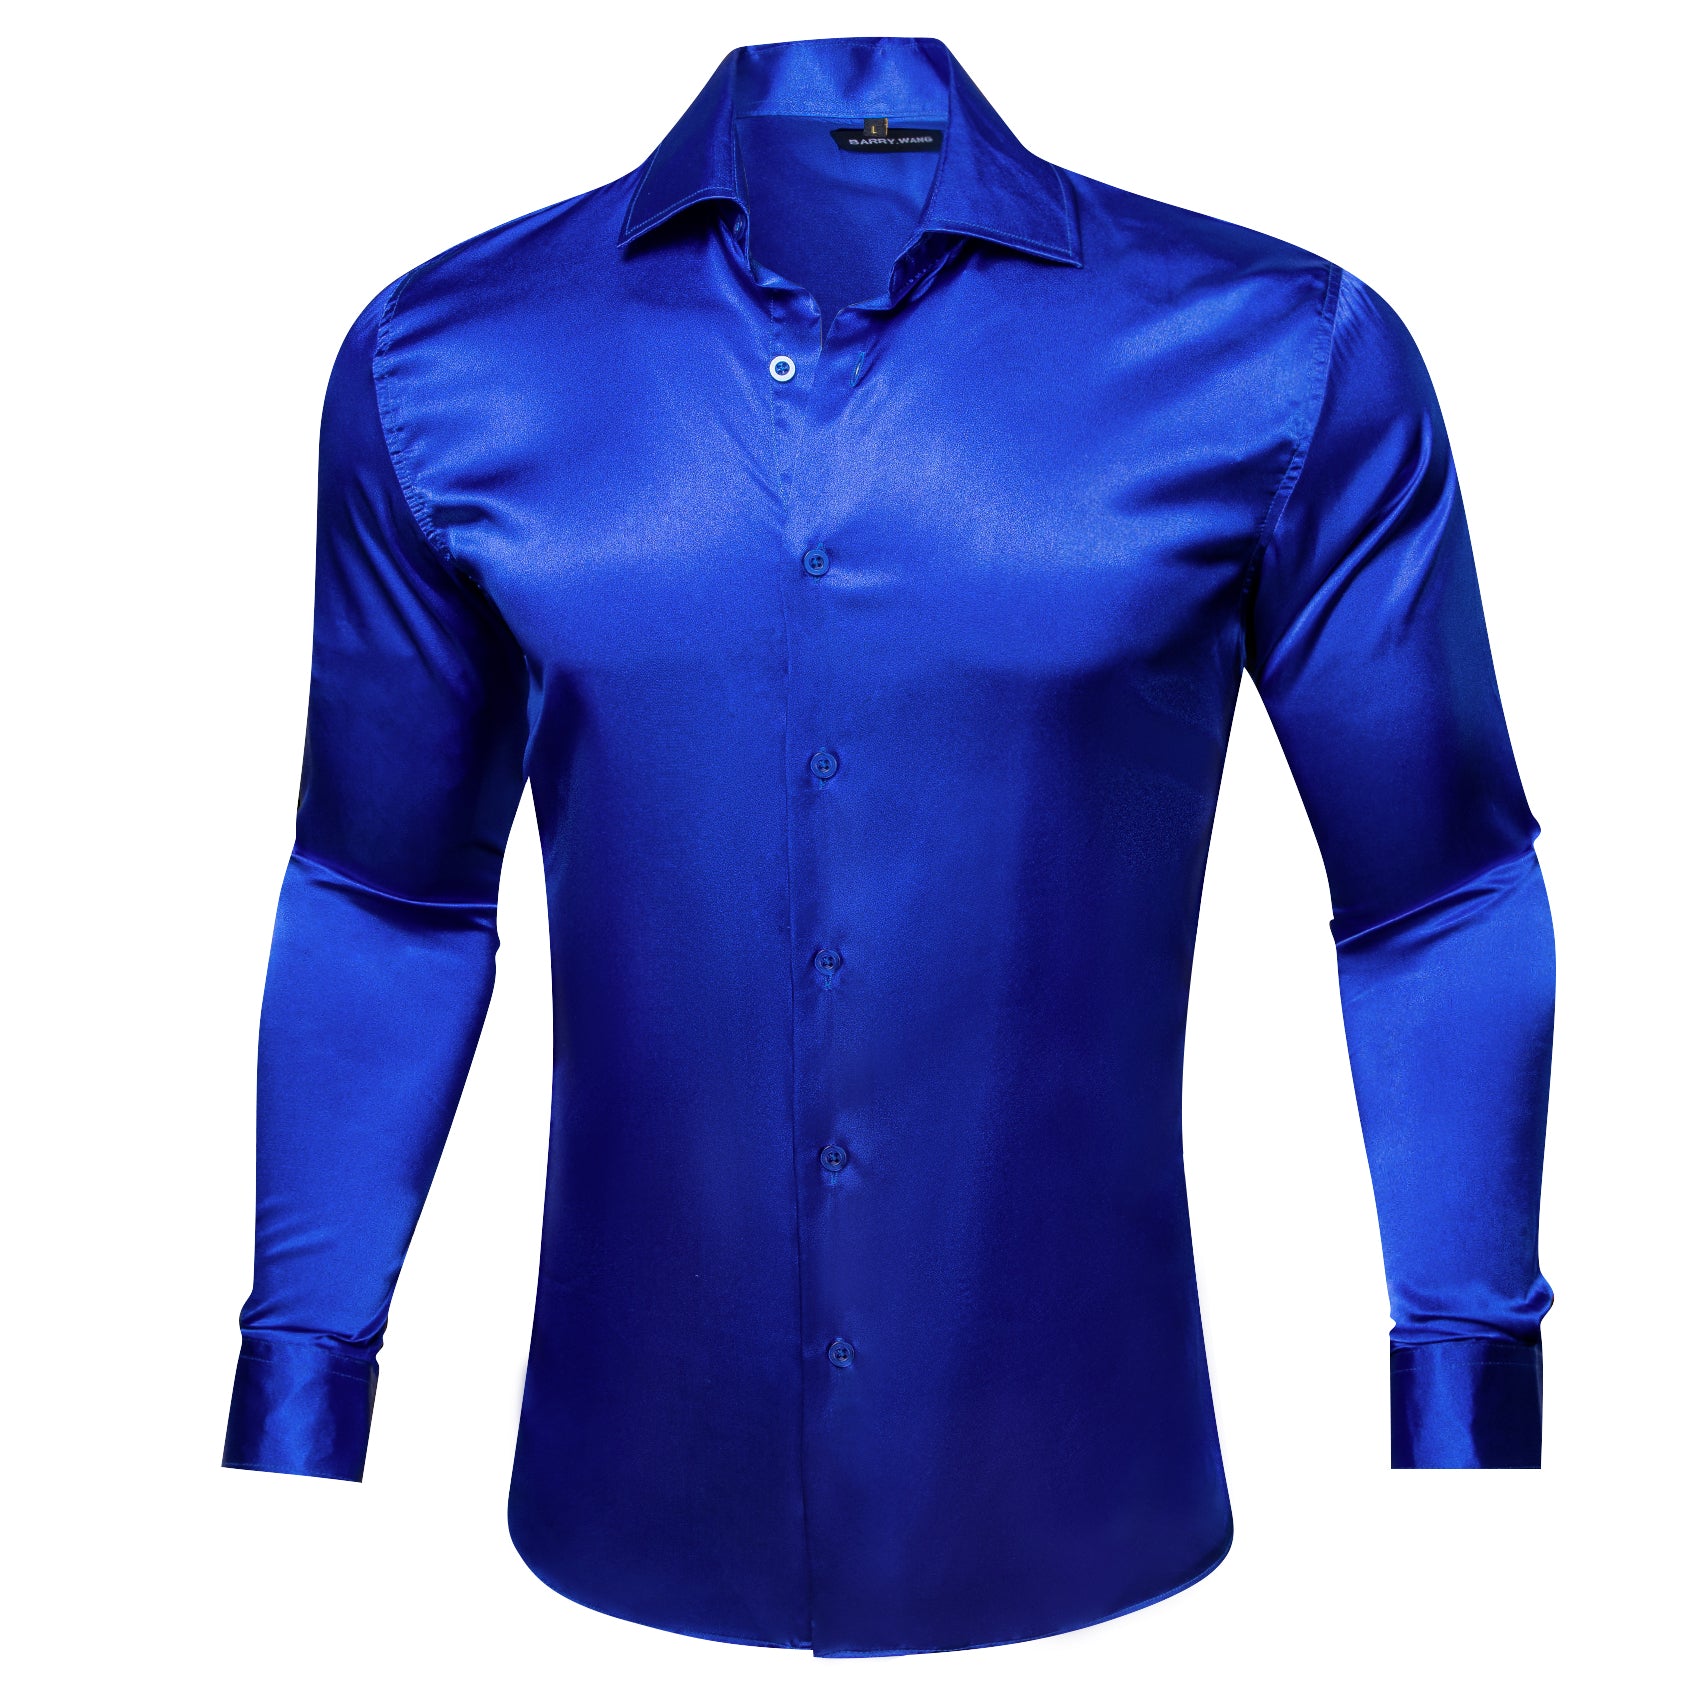 Barry.wang Bright Blue Solid Silk Shirt